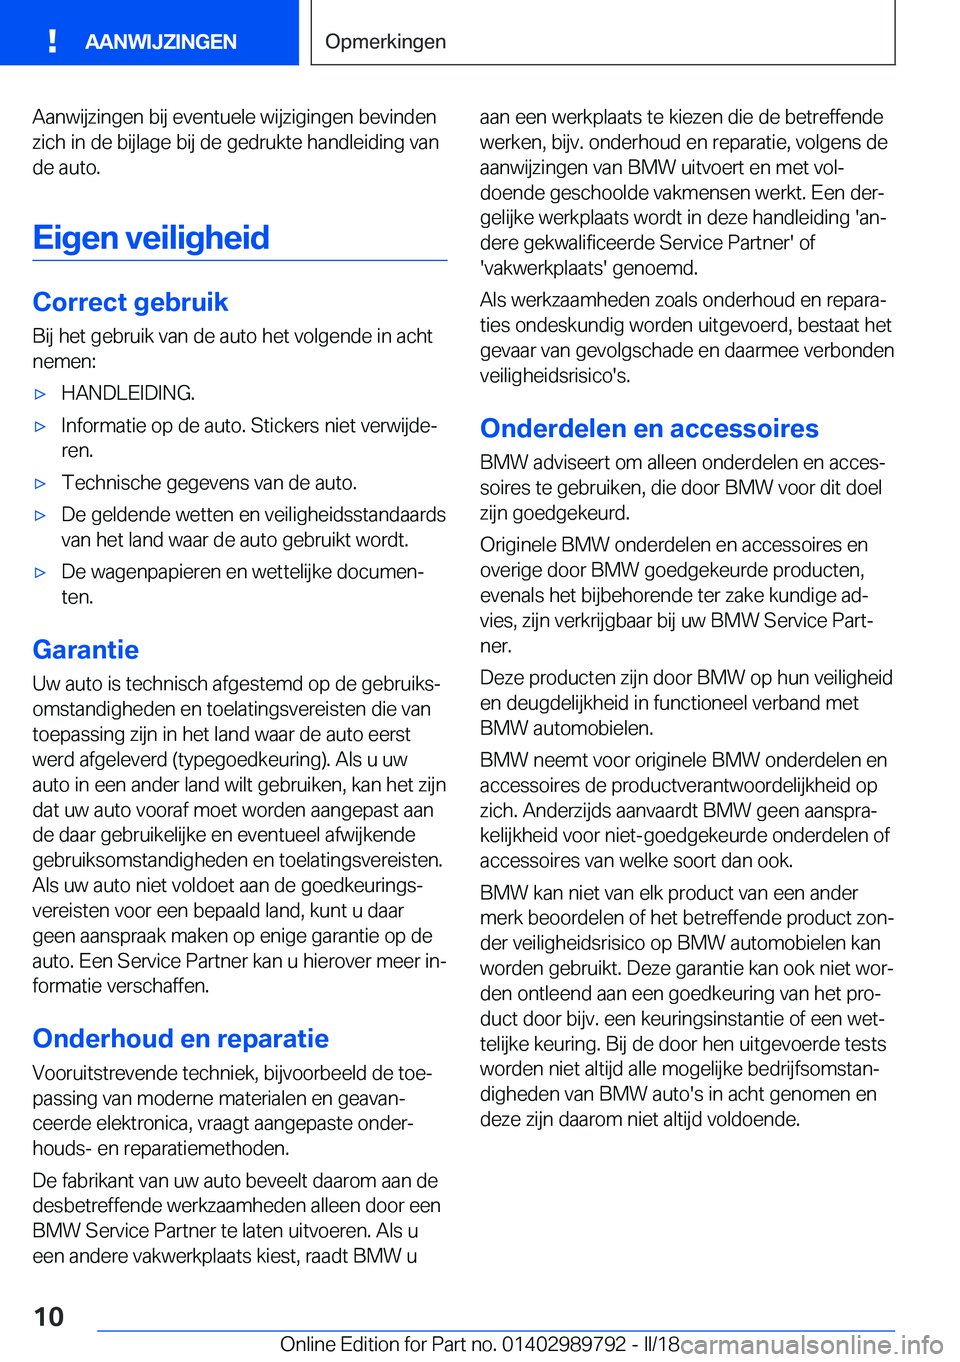 BMW M5 2018  Instructieboekjes (in Dutch) �A�a�n�w�i�j�z�i�n�g�e�n� �b�i�j� �e�v�e�n�t�u�e�l�e� �w�i�j�z�i�g�i�n�g�e�n� �b�e�v�i�n�d�e�n�z�i�c�h� �i�n� �d�e� �b�i�j�l�a�g�e� �b�i�j� �d�e� �g�e�d�r�u�k�t�e� �h�a�n�d�l�e�i�d�i�n�g� �v�a�n
�d�e�